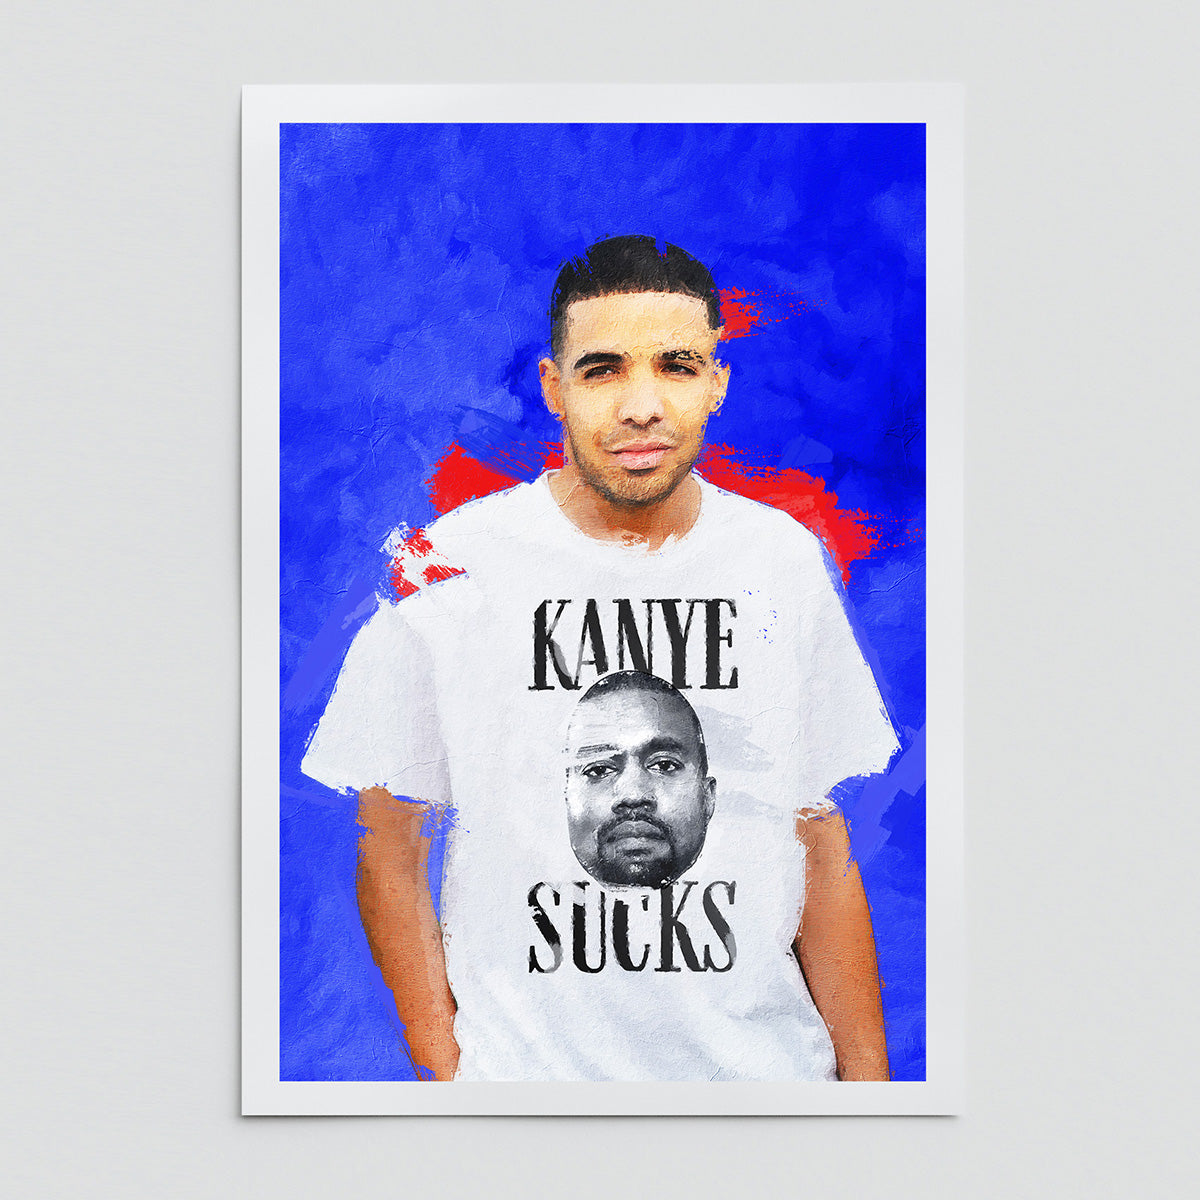 "Kanye Sxxks" fine art print